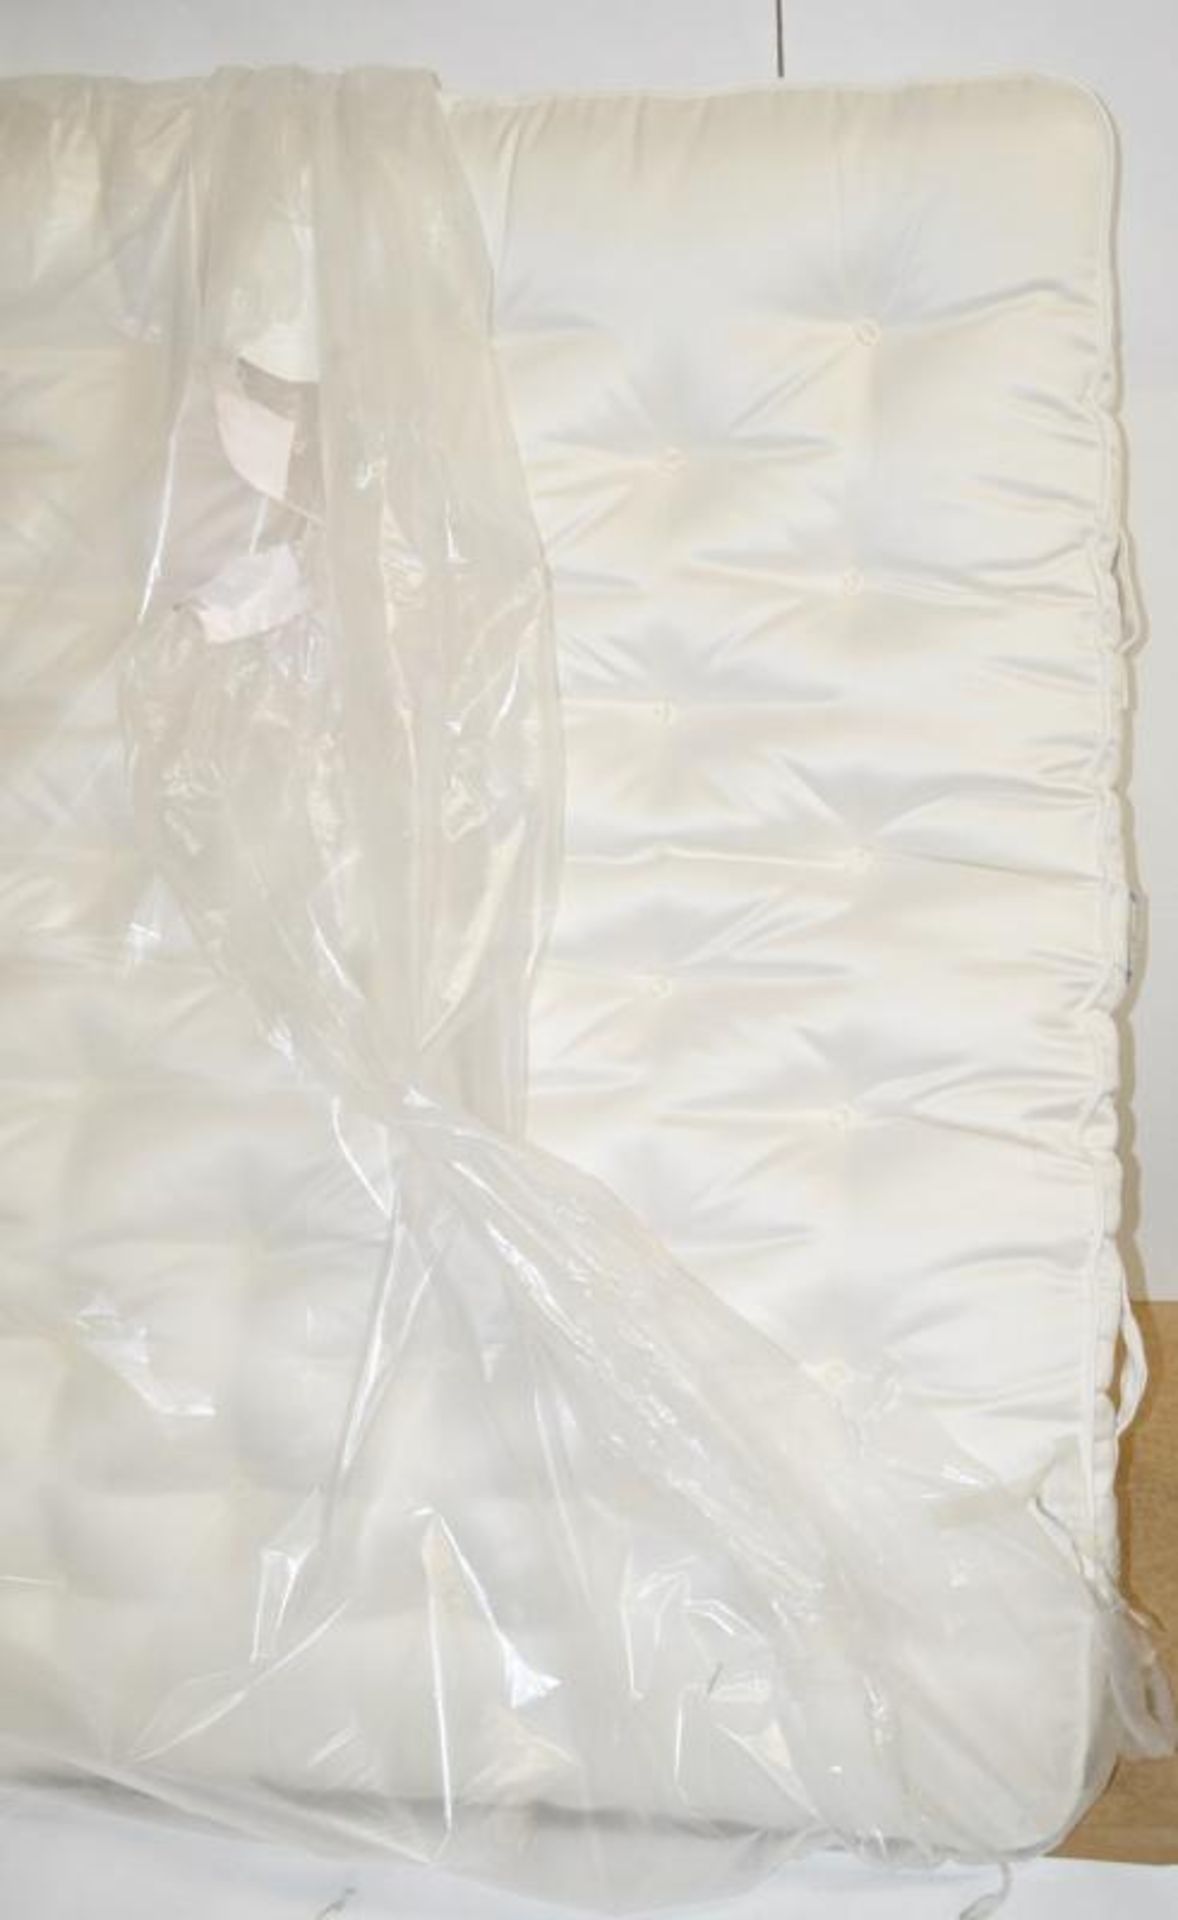 1 x Vispring 'Bedstead Supreme' Luxury FIRM Mattress - Size: 175 x 200 x 23cm - British Made - Image 6 of 10